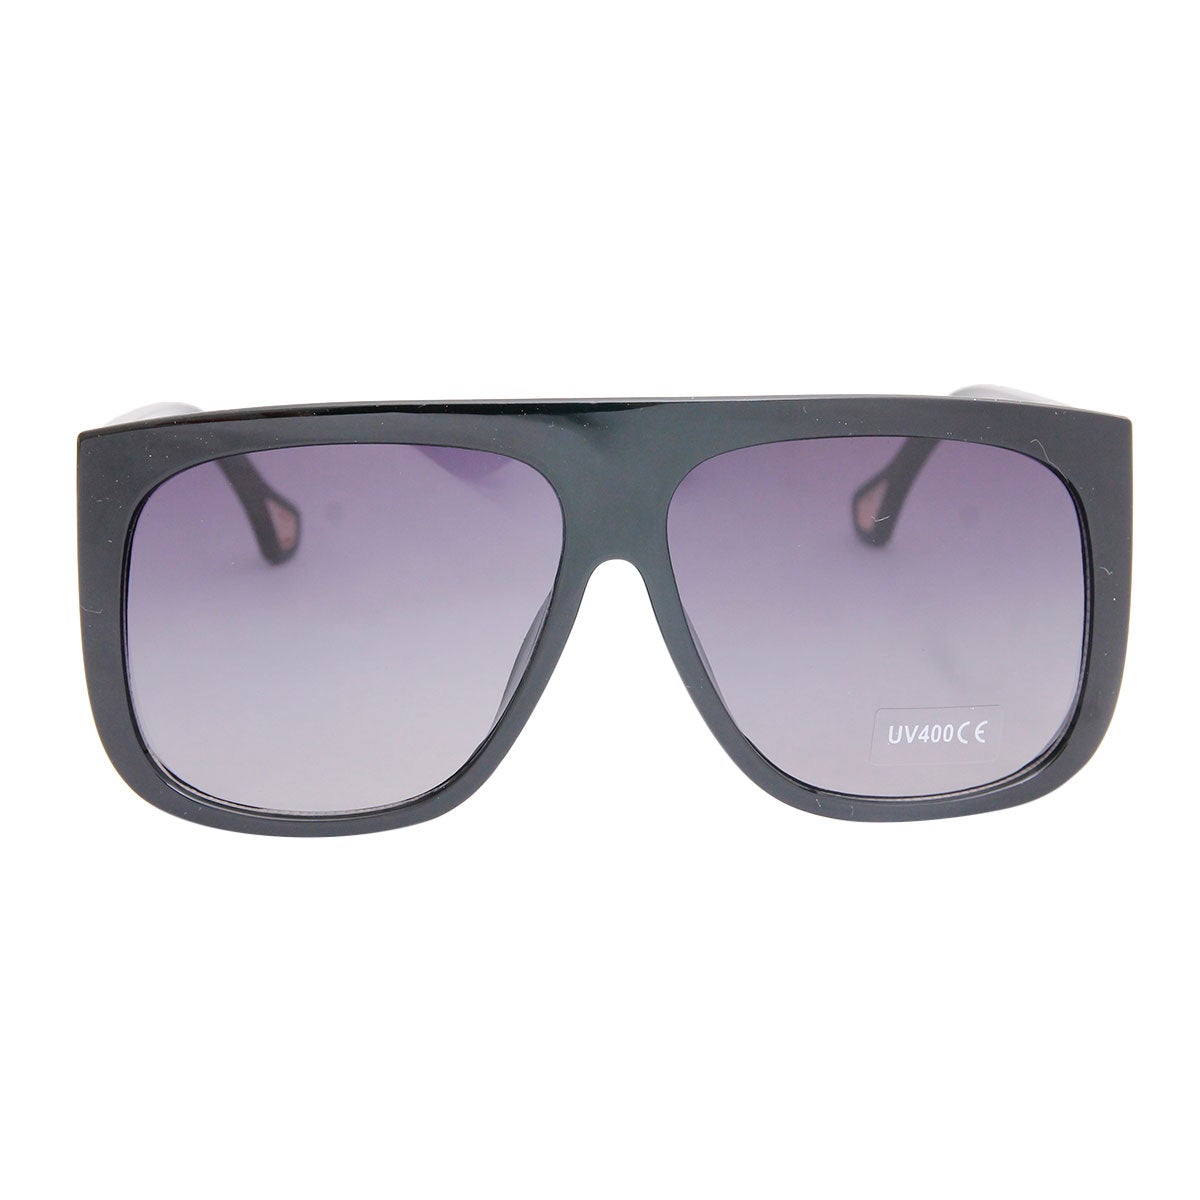 Black Side Shield Sunglasses